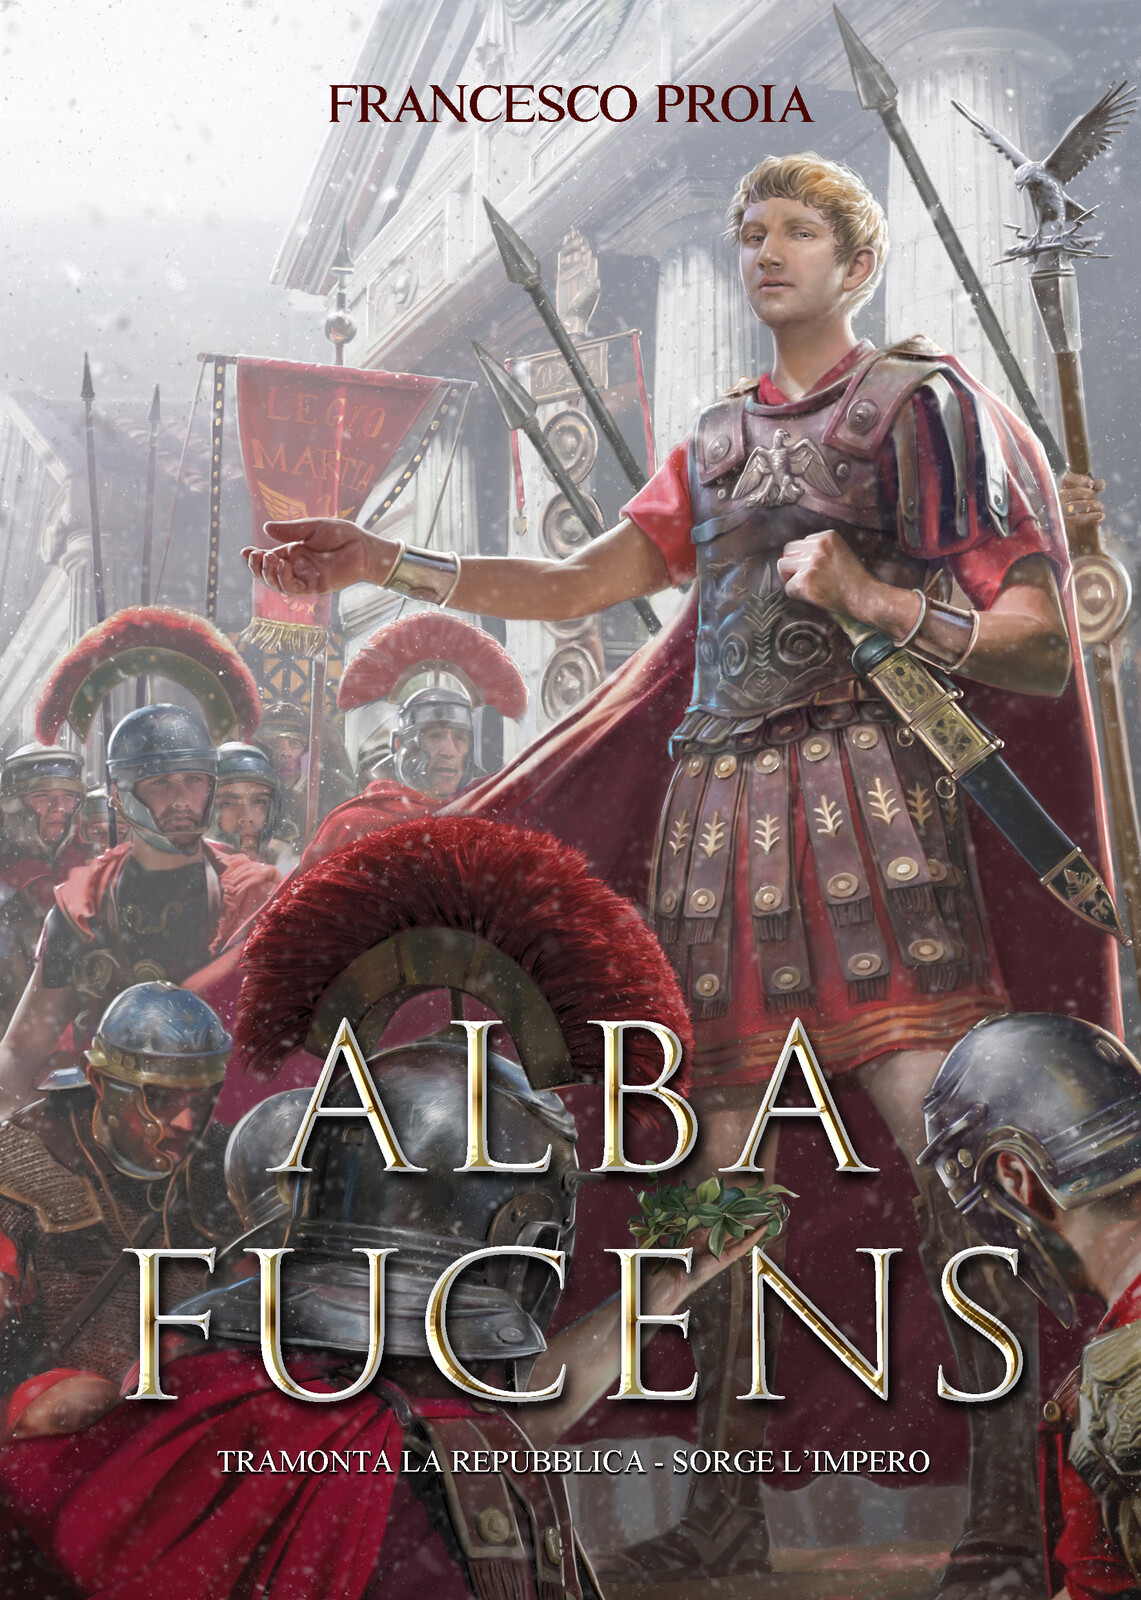 COVER BOOK HISTORICAL NOVEL ALBA FUCENS